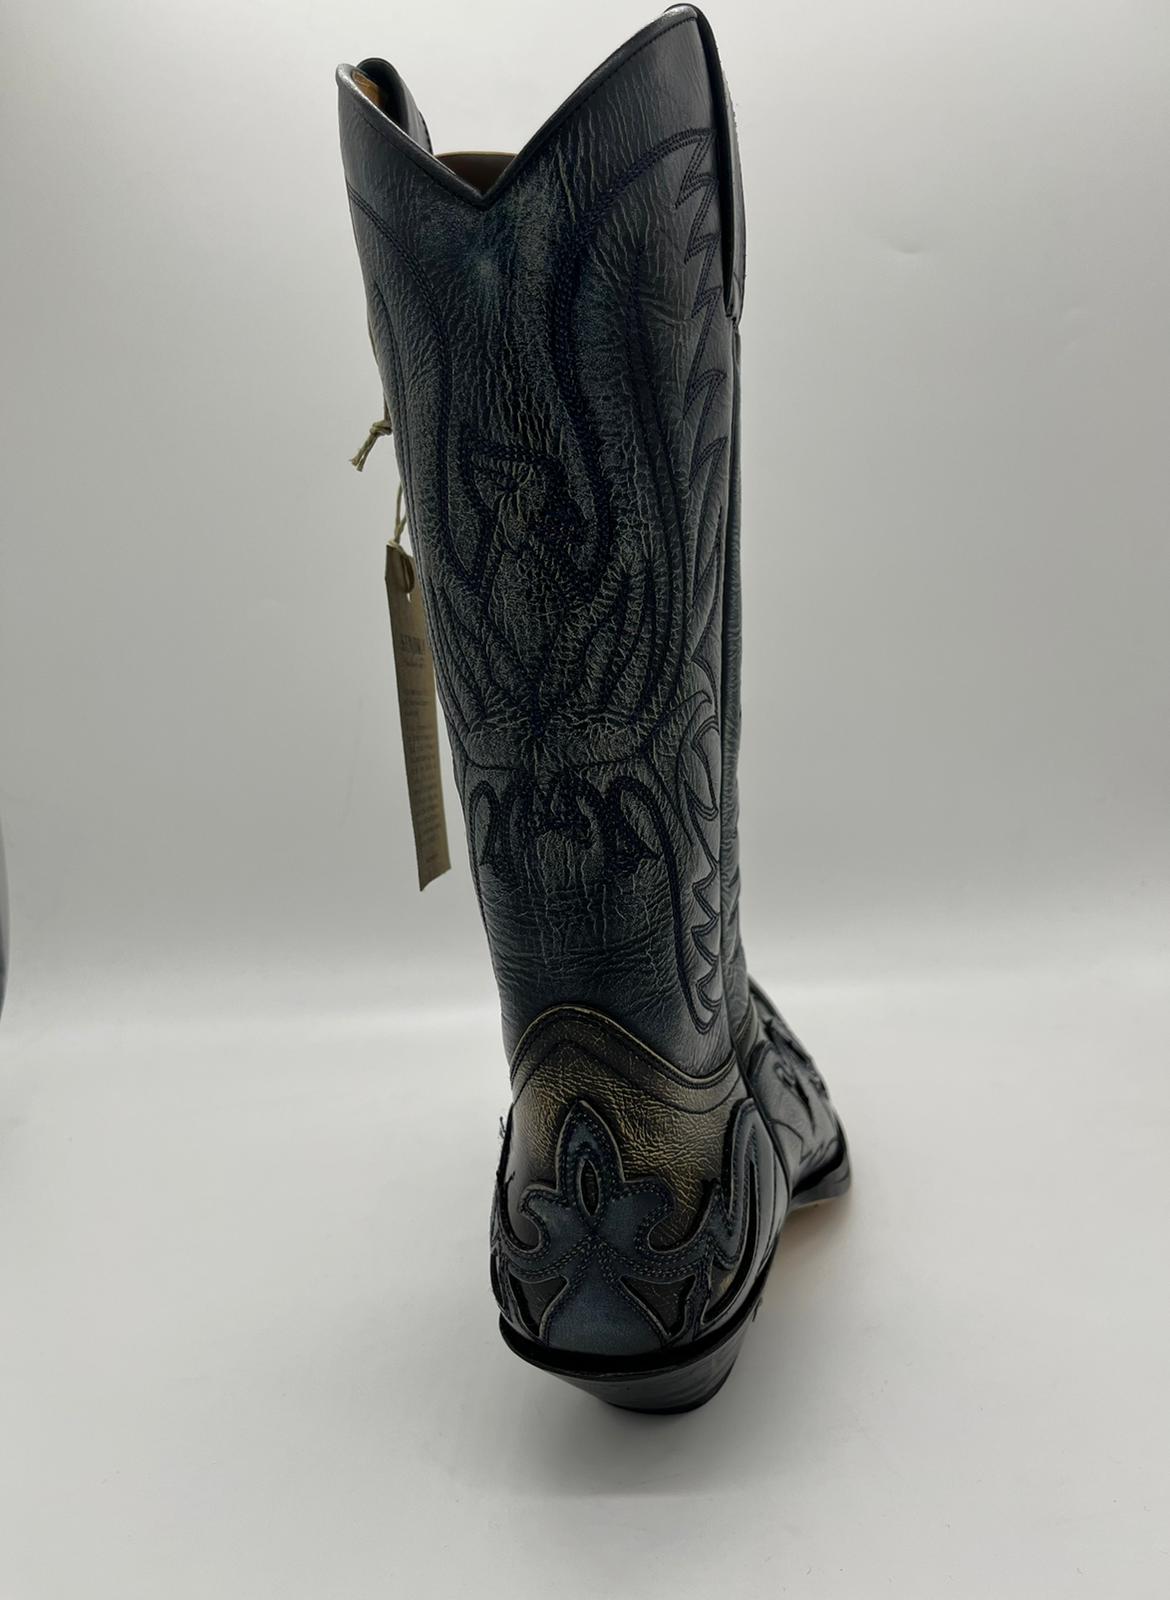 Sendra Stiefel Western Cowboystiefel Biker Boots 3241 Denver Azul Dirty Hueso